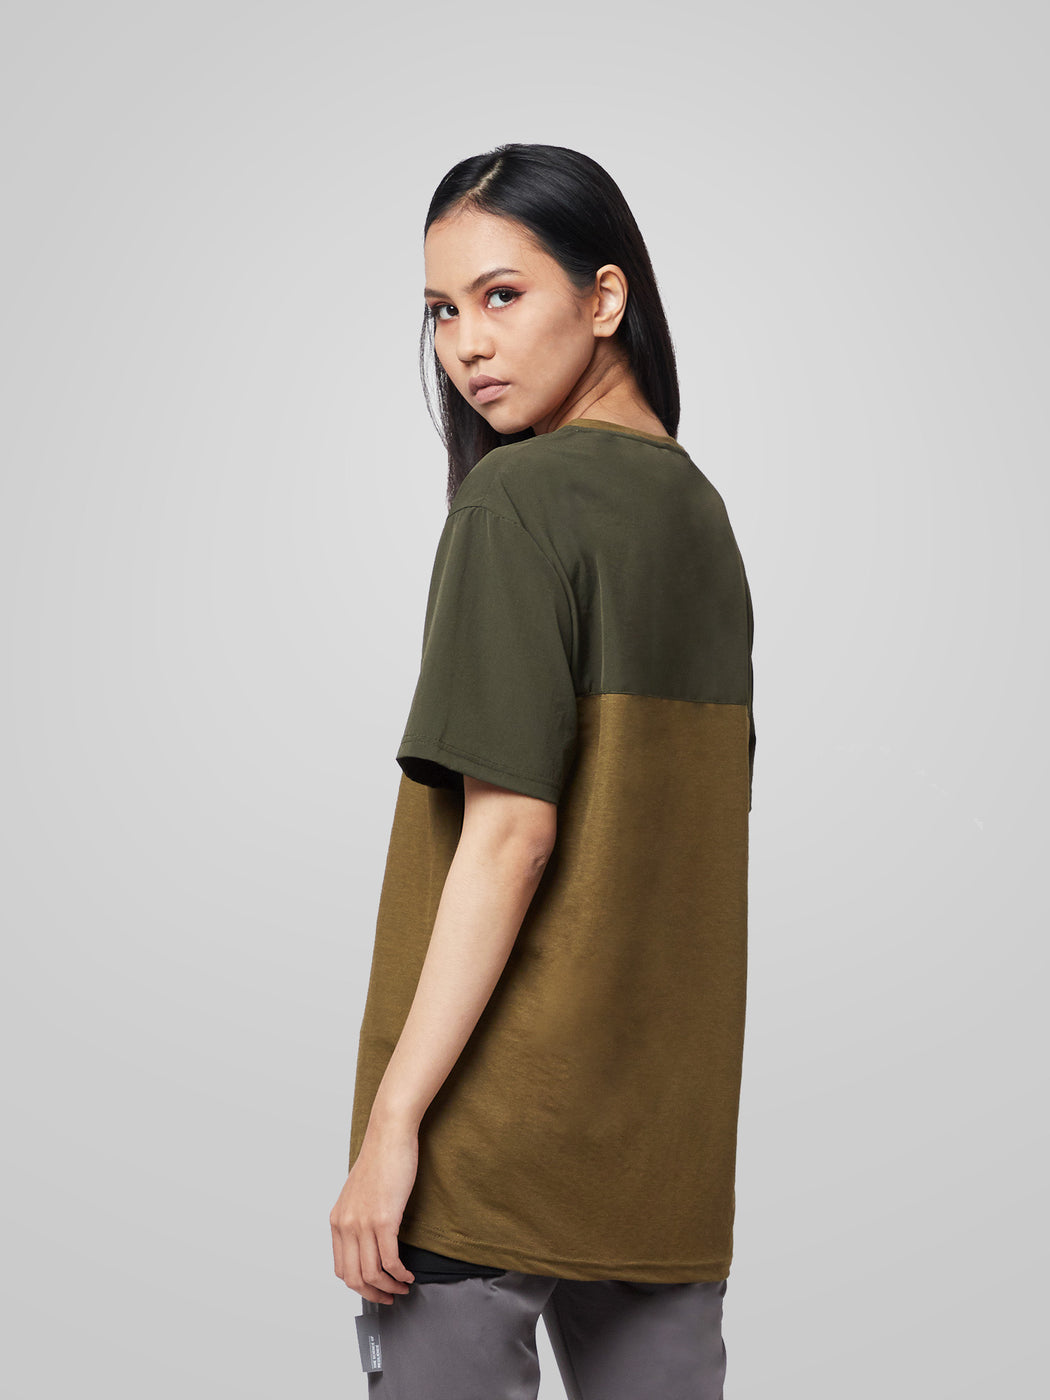 Unisex Ultimate Utilitarian Army Female T-shirt